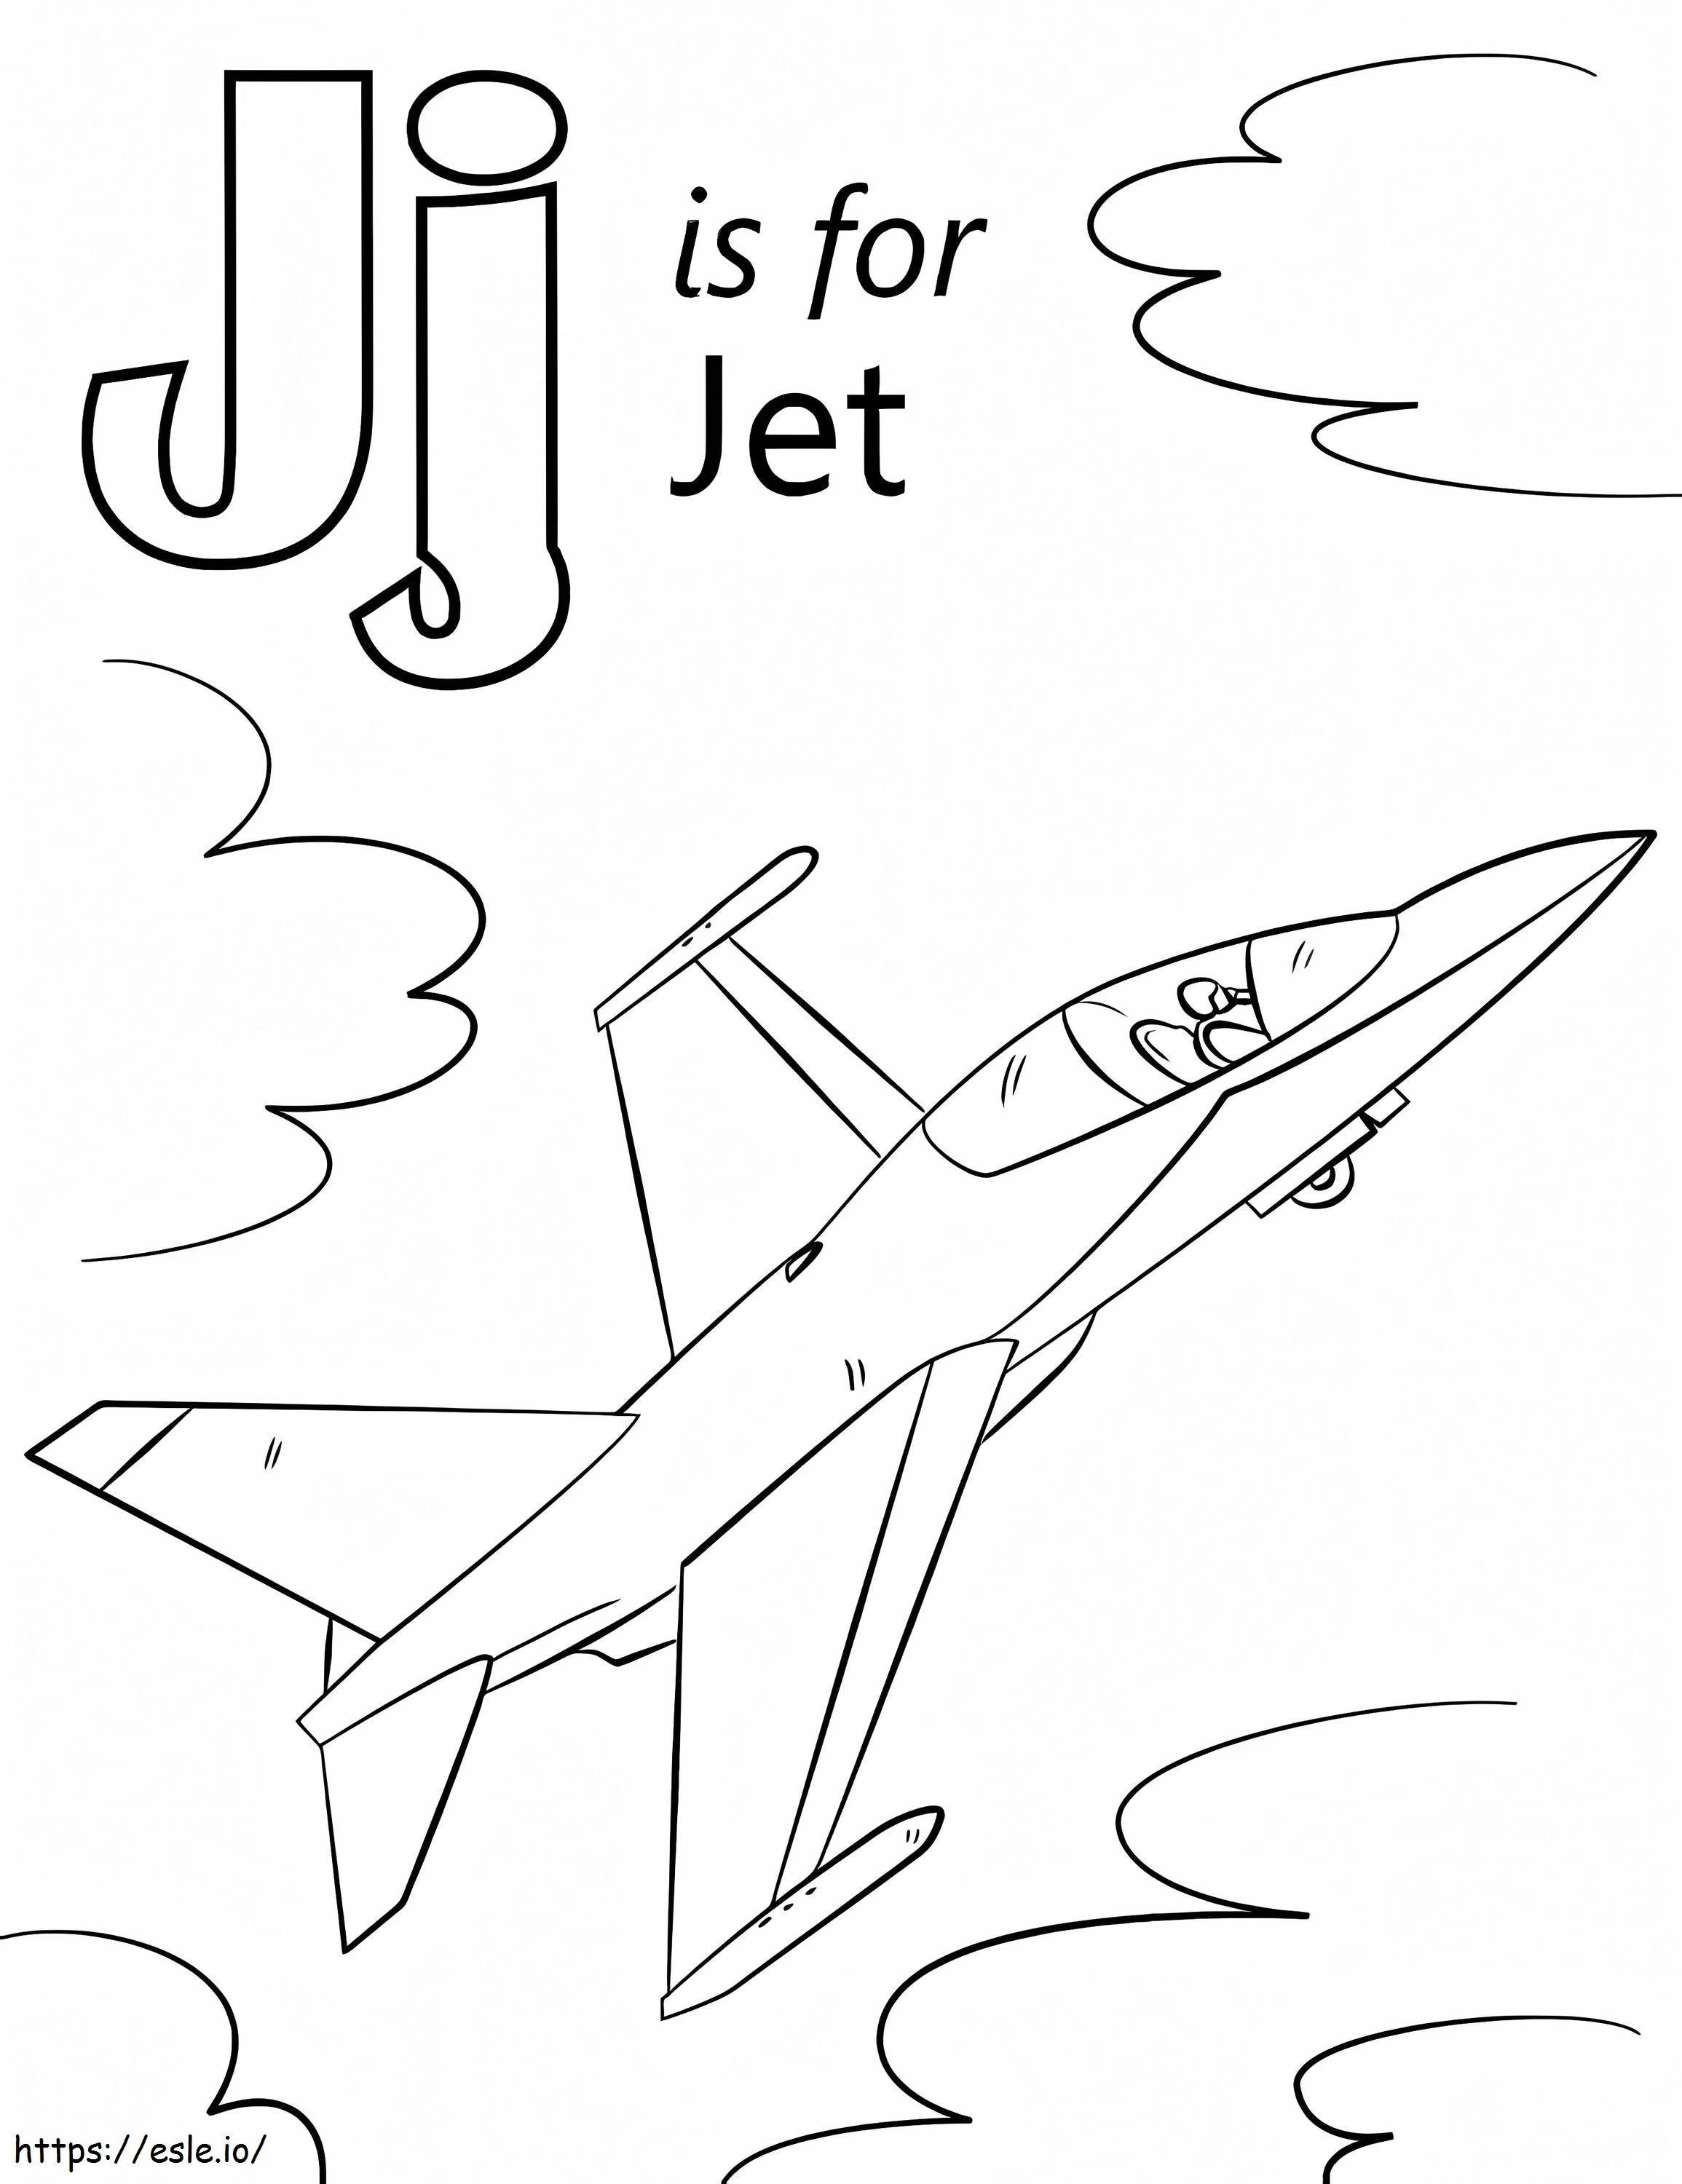 Jet Letter J coloring page